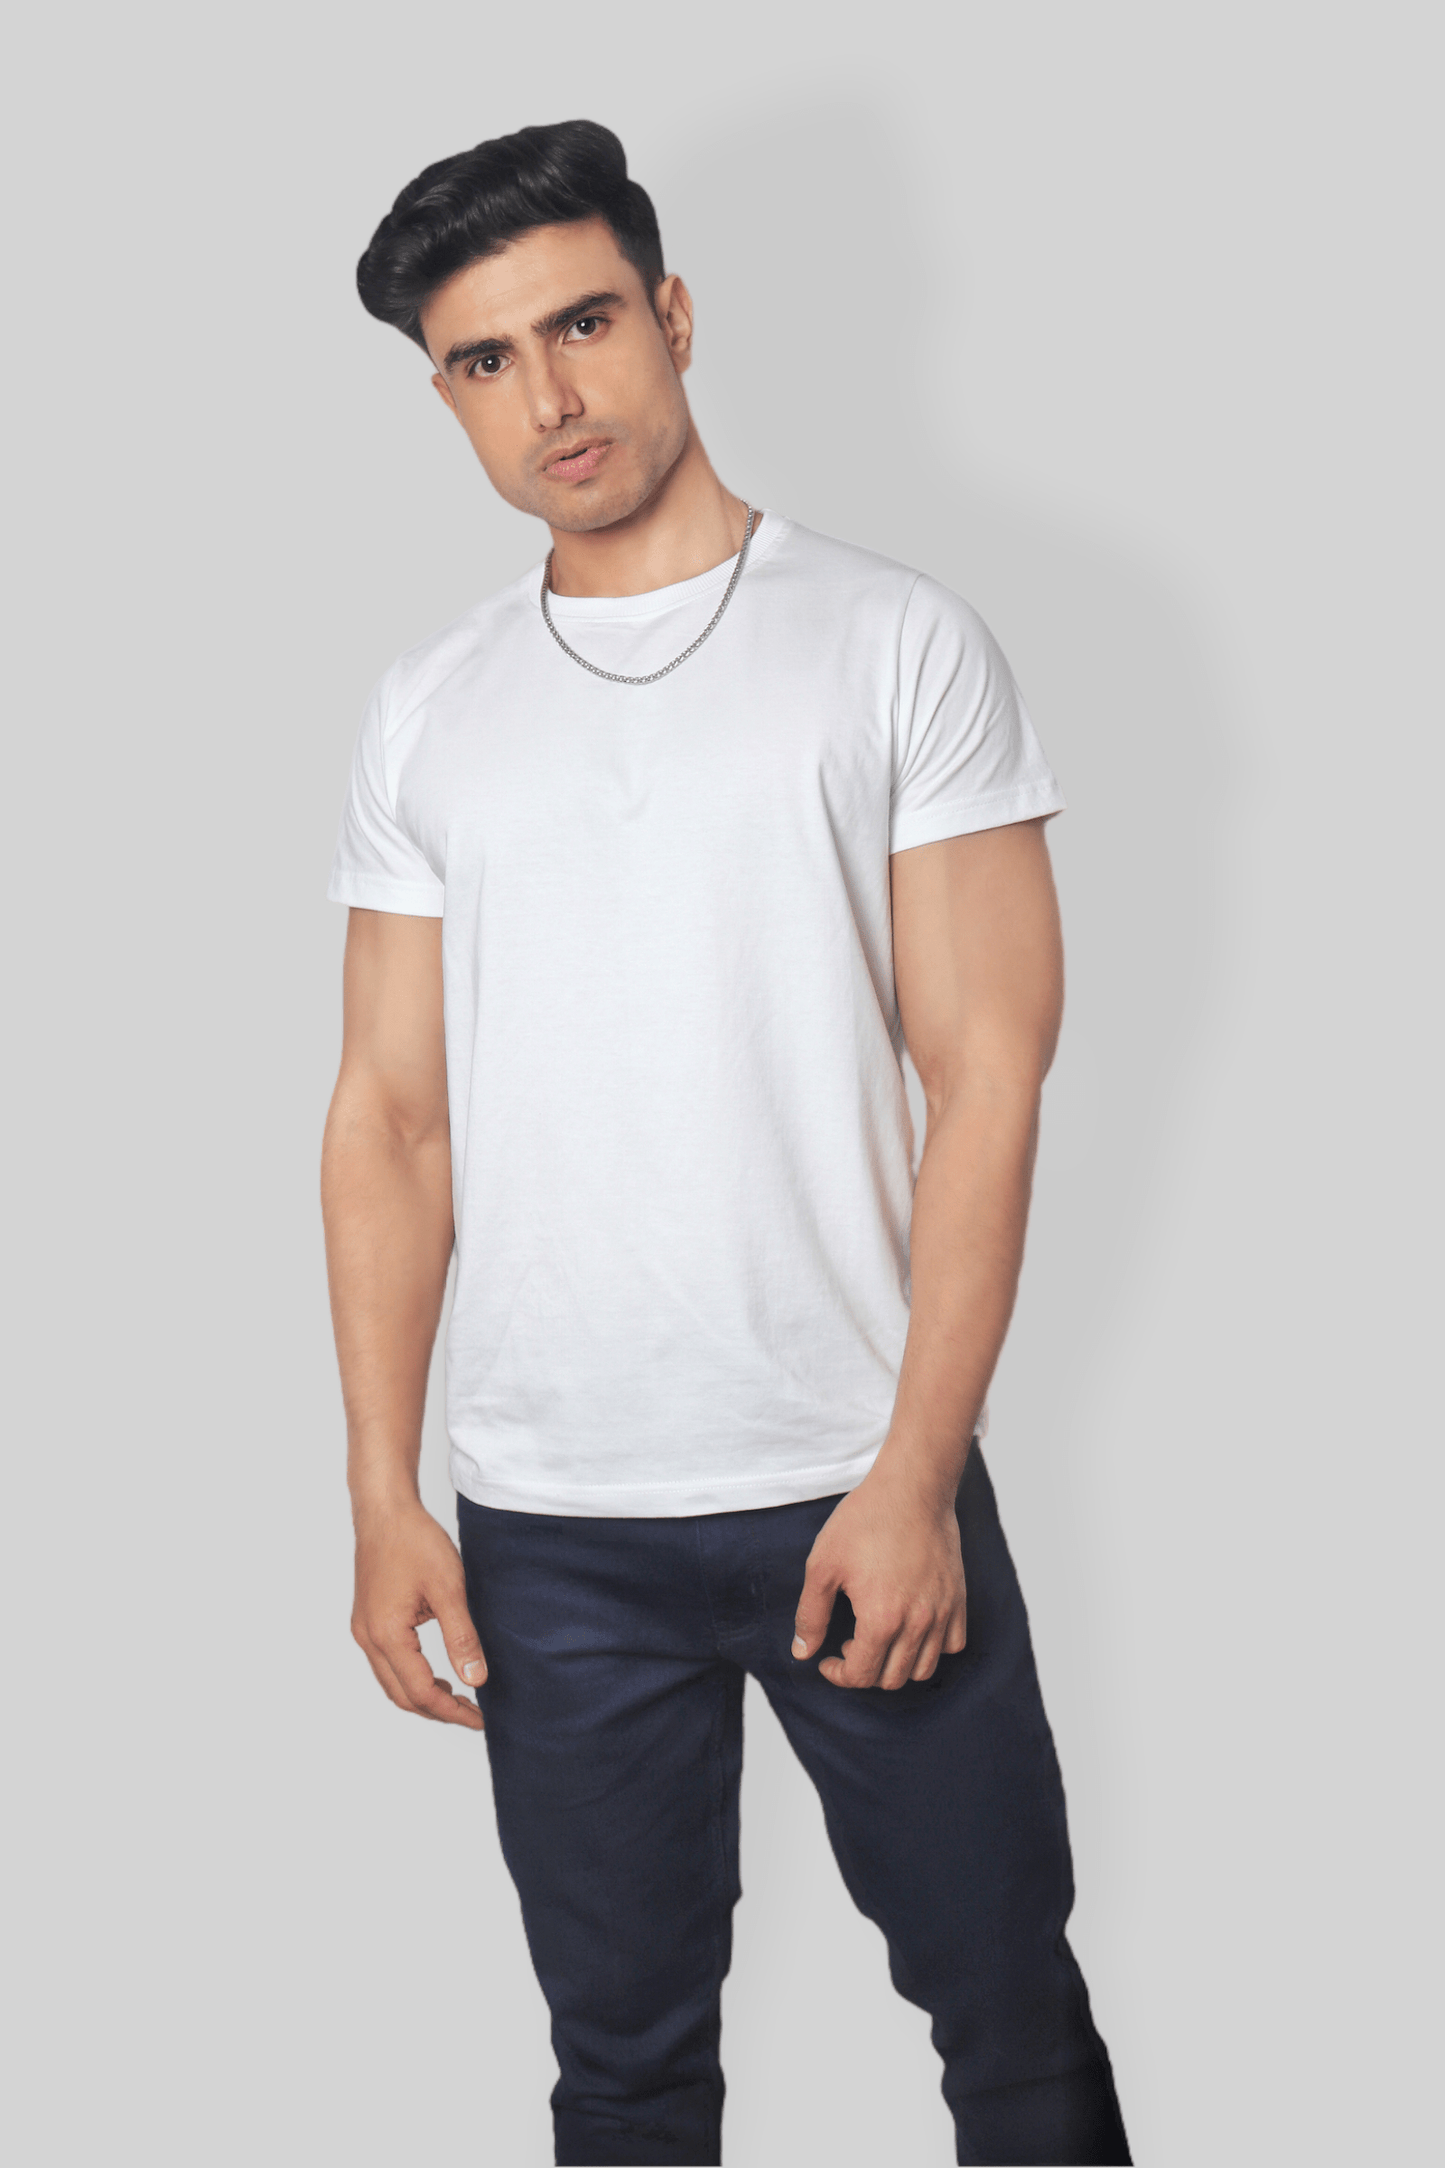 Solid White plain Round Neck Cotton Tshirt for men